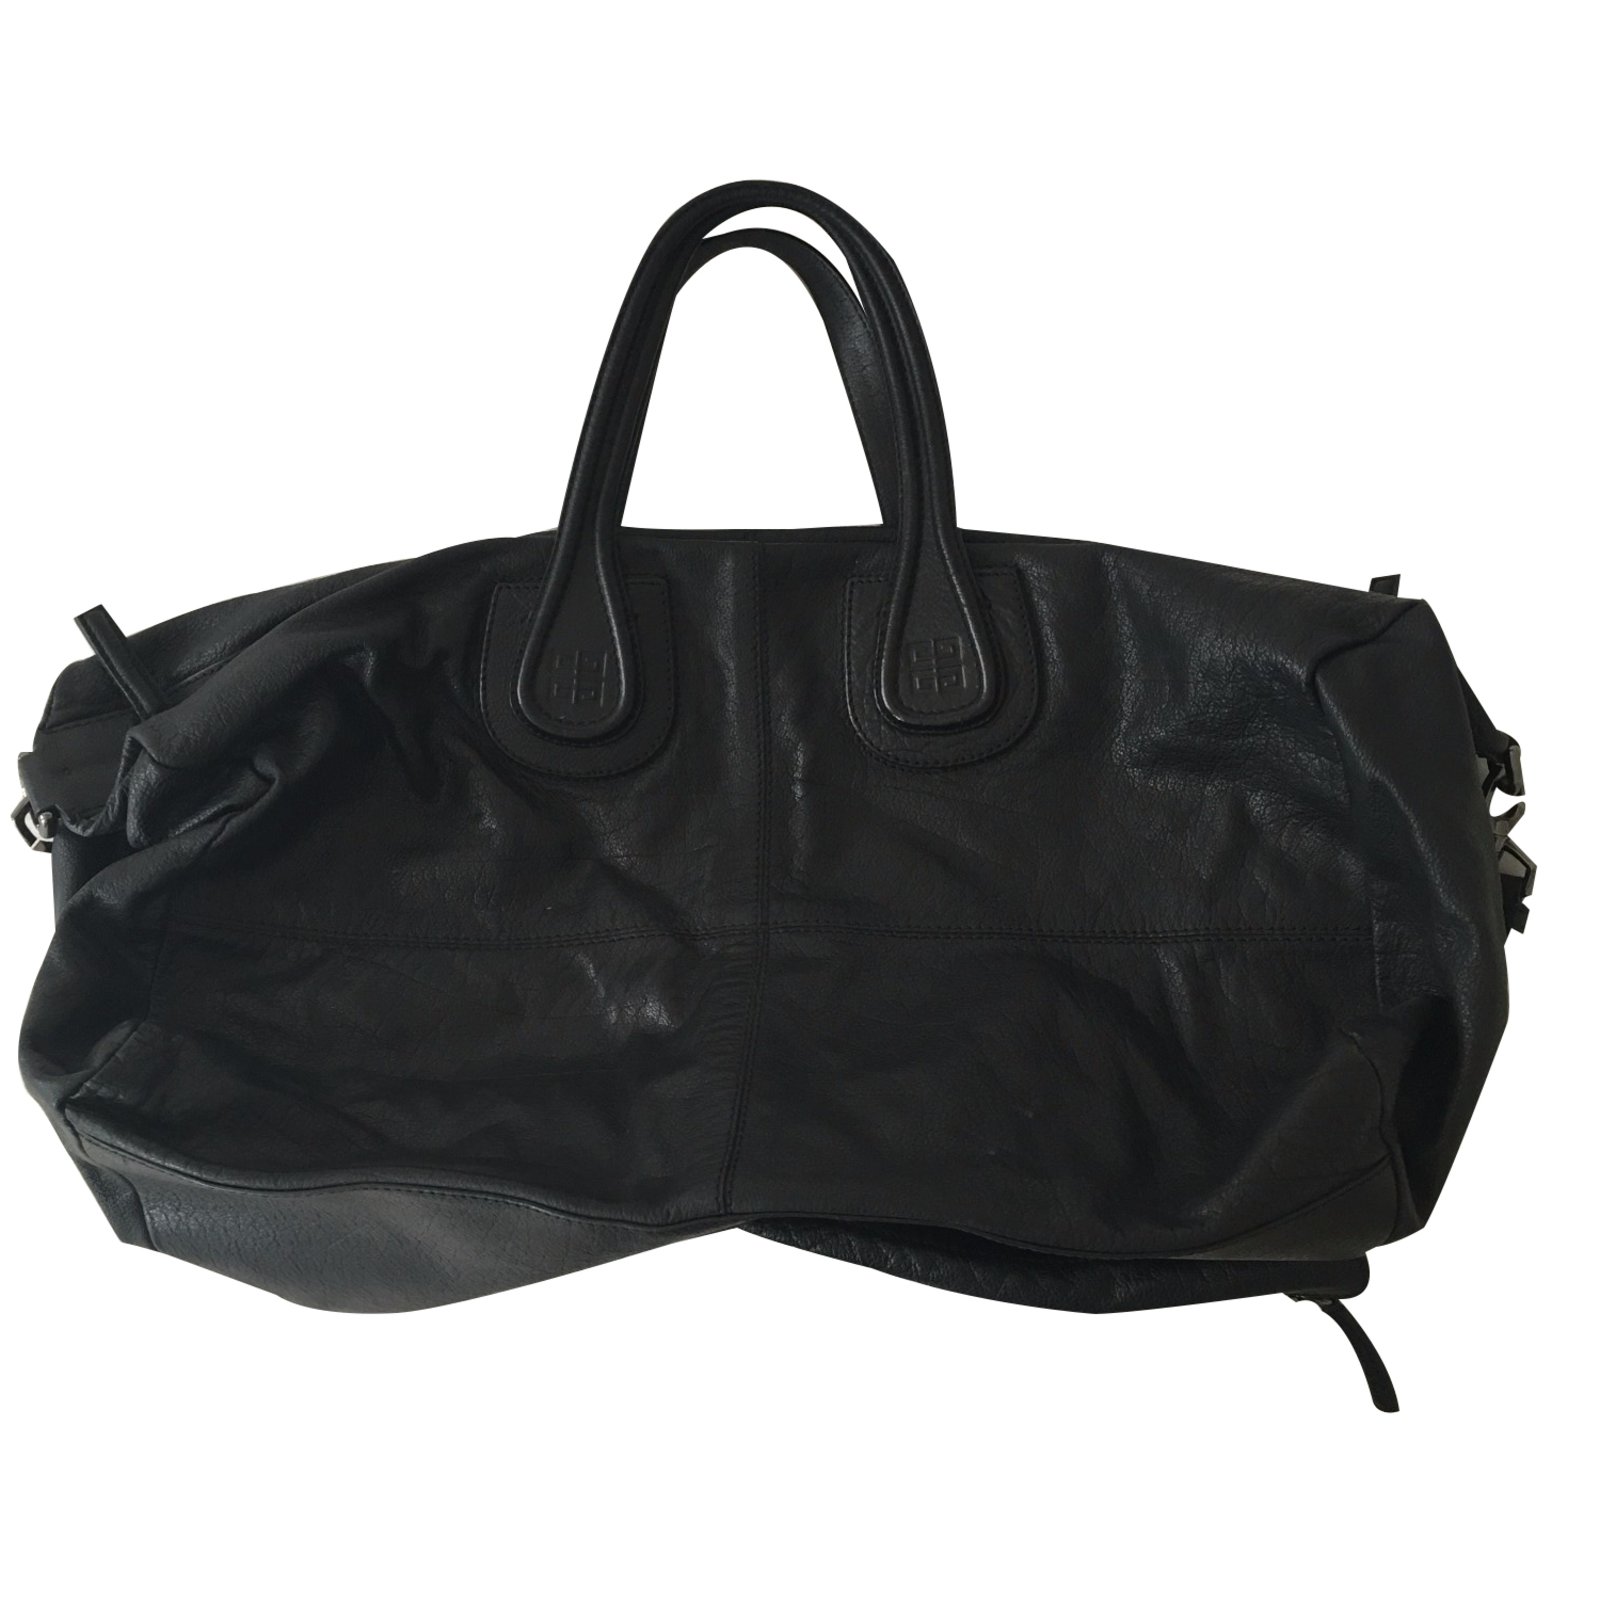 Givenchy Travel bag Travel bag Leather 